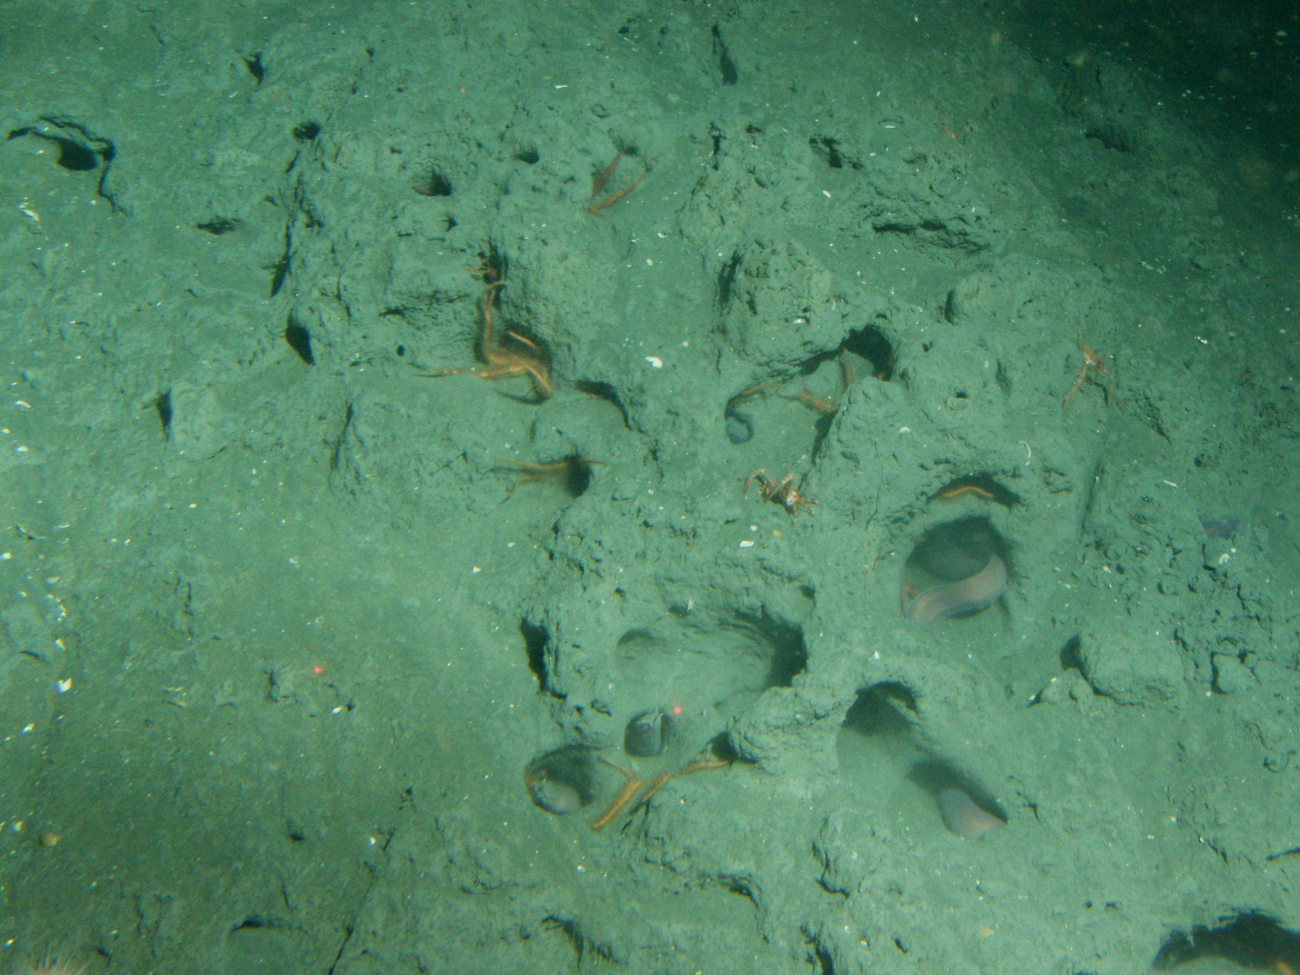 Pacific hagfish (Eptatretus stoutii) and brittle stars in holesat 150 meters depth